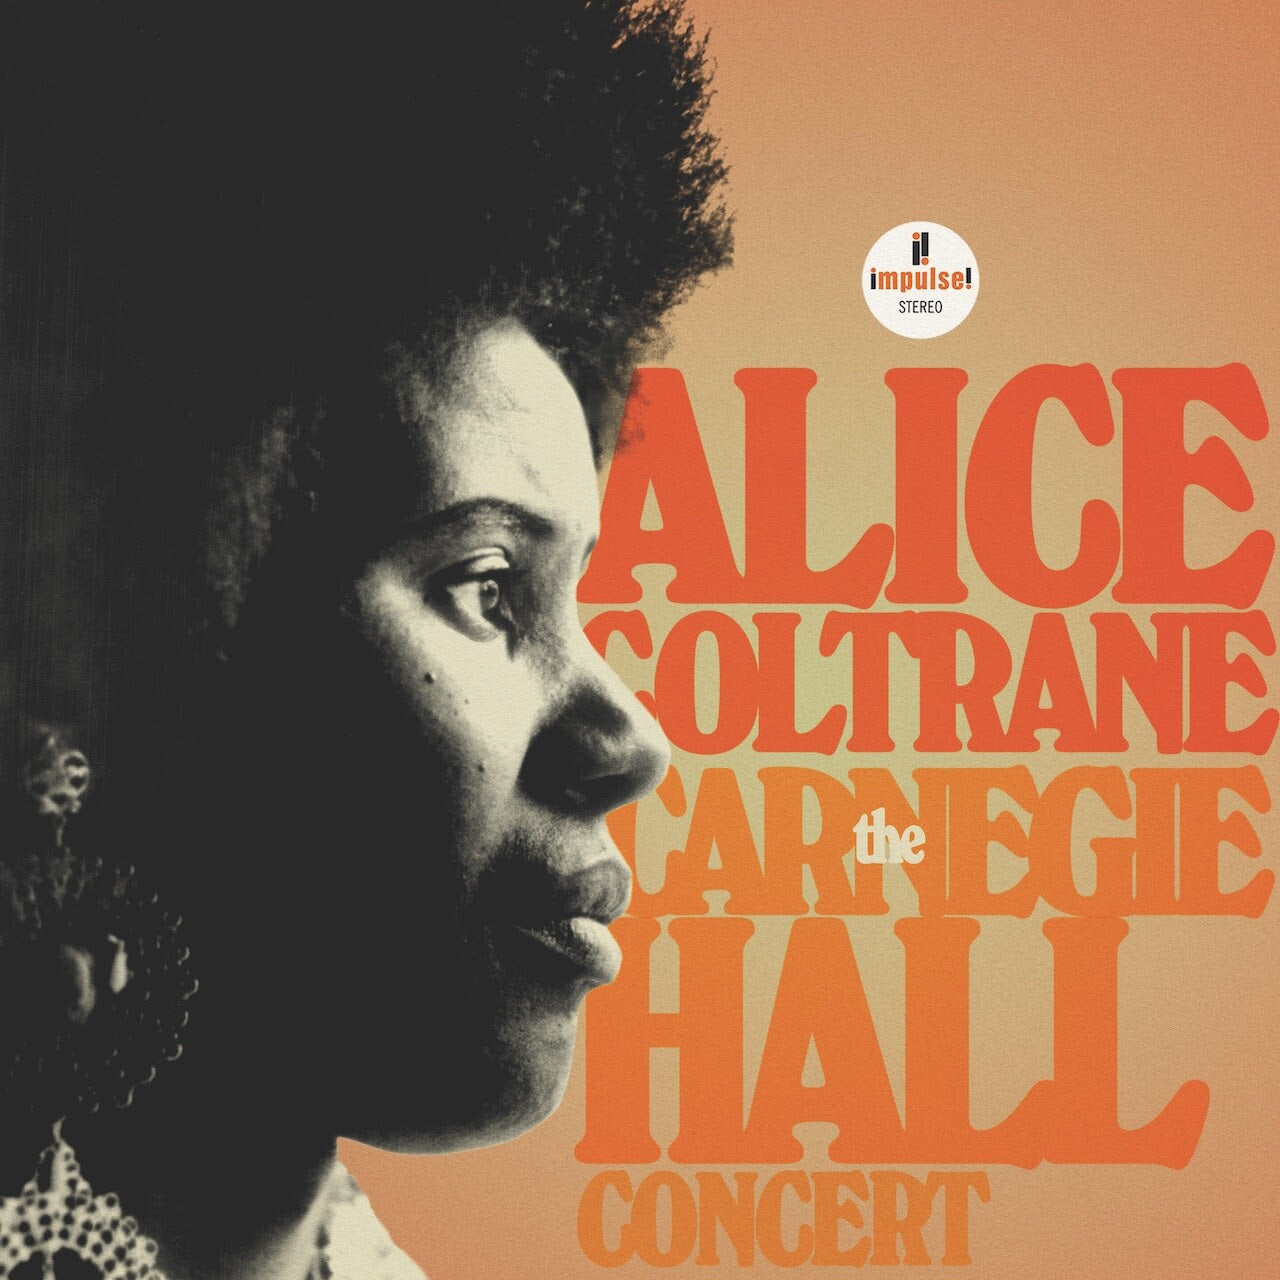 Alice Coltrane - The Carnegie Hall Concert | Buy the Vinyl LP 